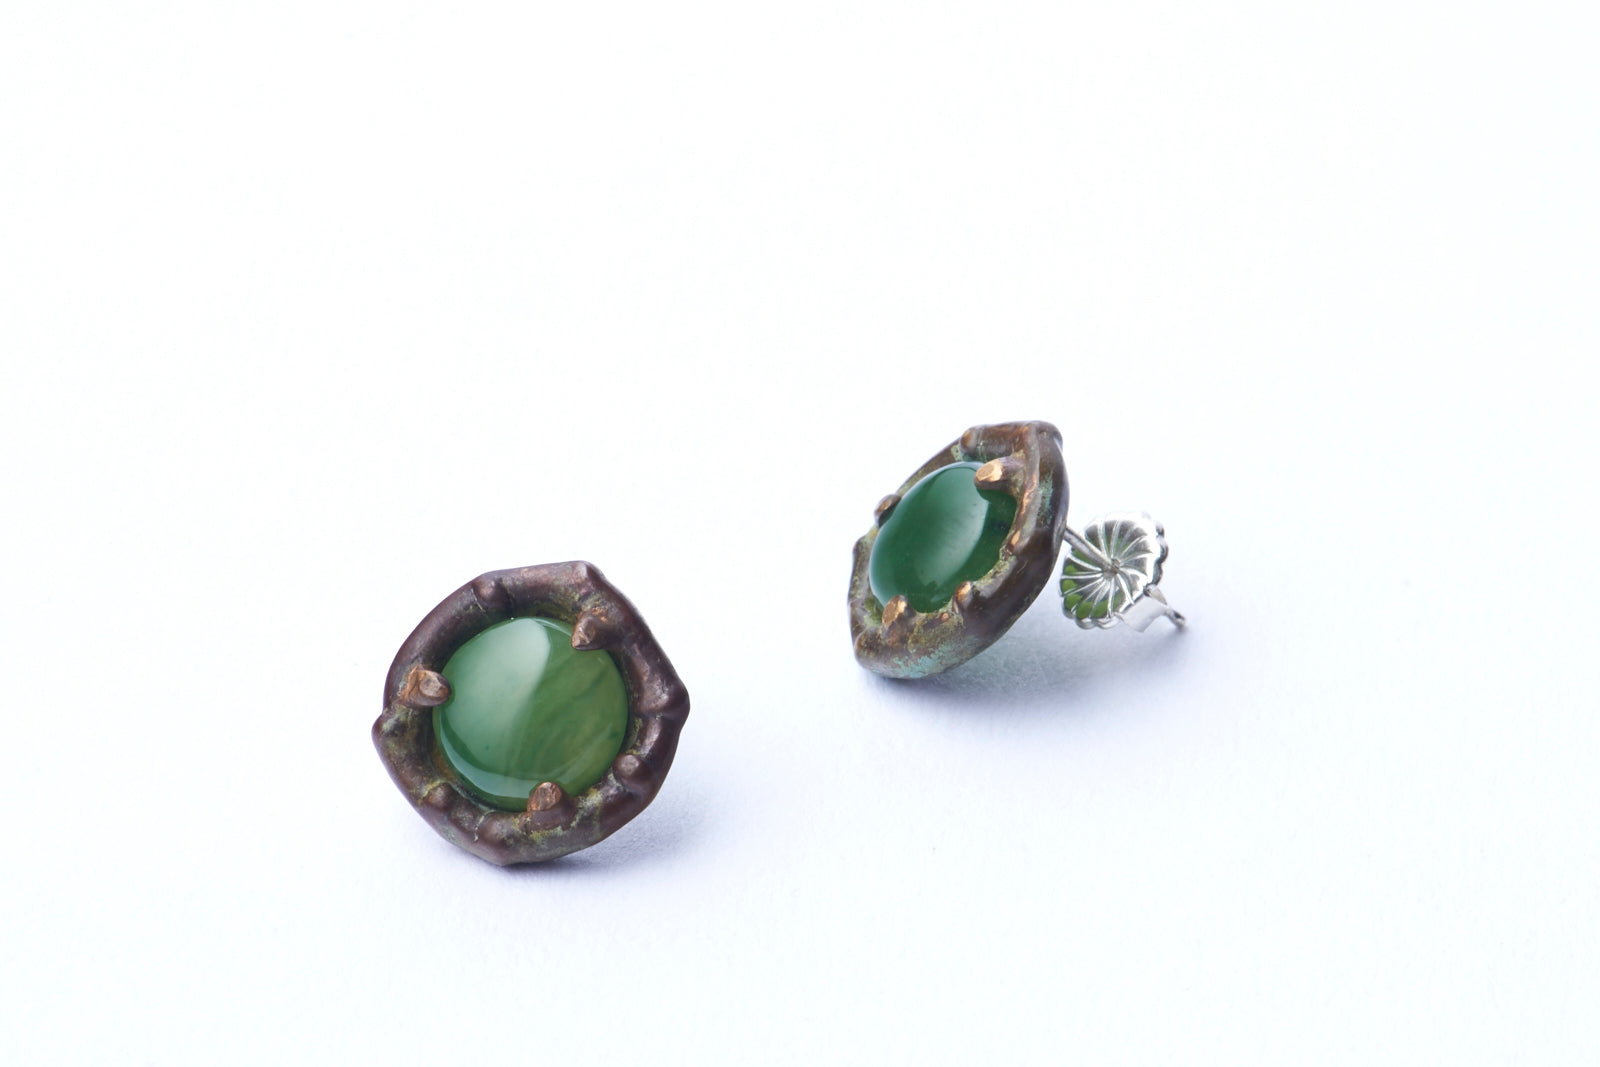 Edamame Retro Earrings in Rose Quartz and Green Jade